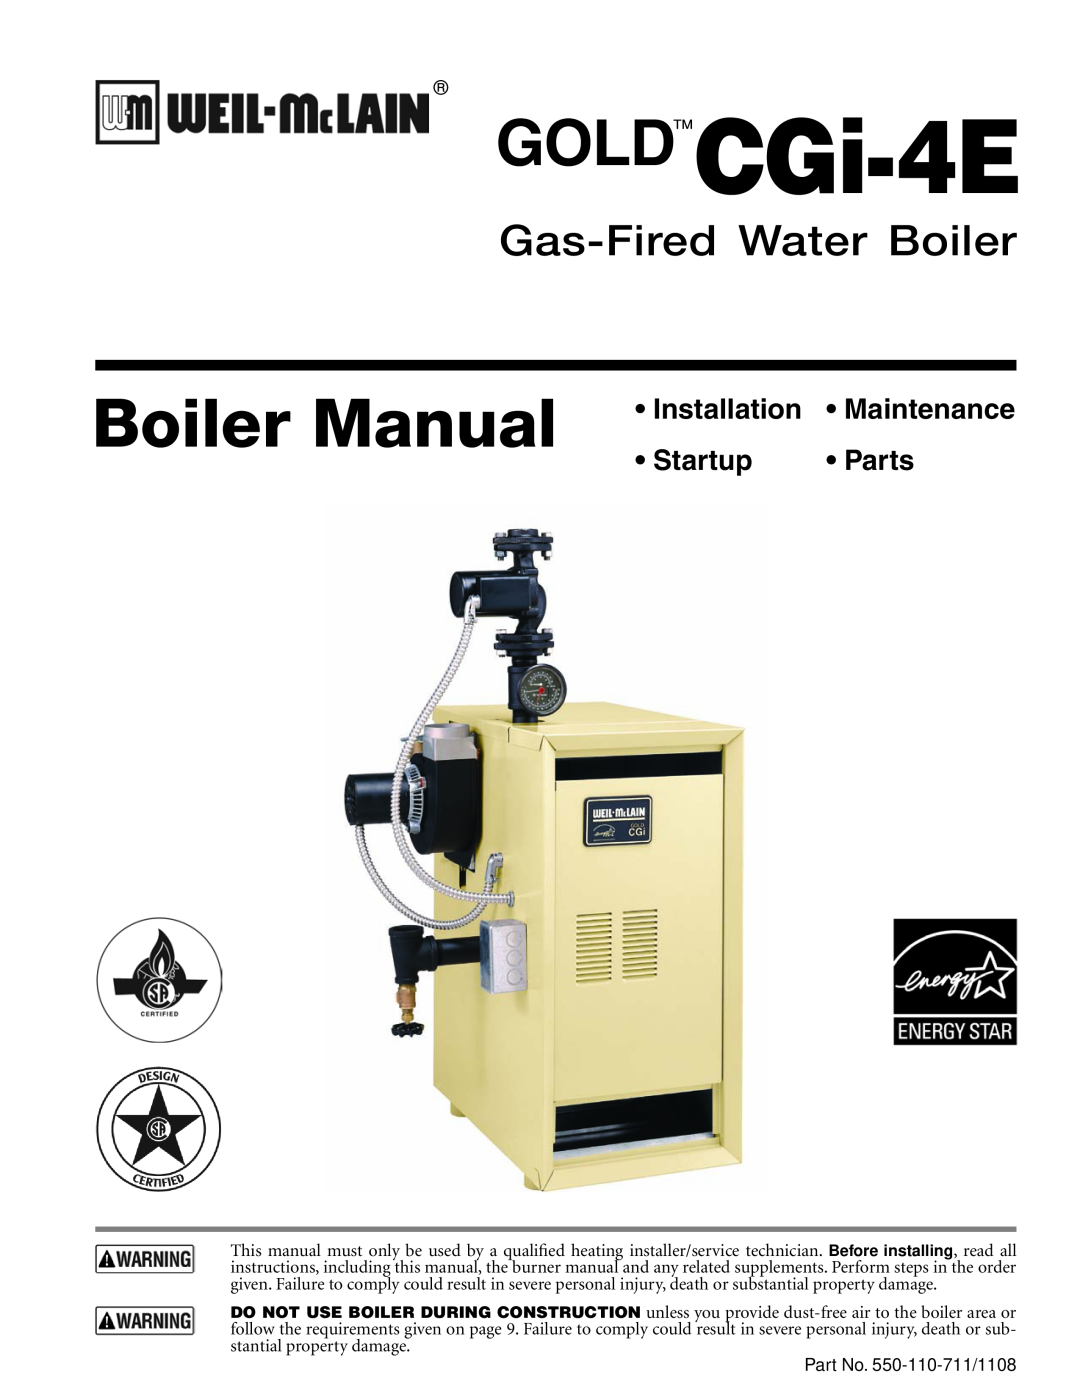 Weil-McLain CGI-4E manual Installation Maintenance, Startup Parts, GOLDCGi-4E, Boiler Manual, Gas-FiredWater Boiler 